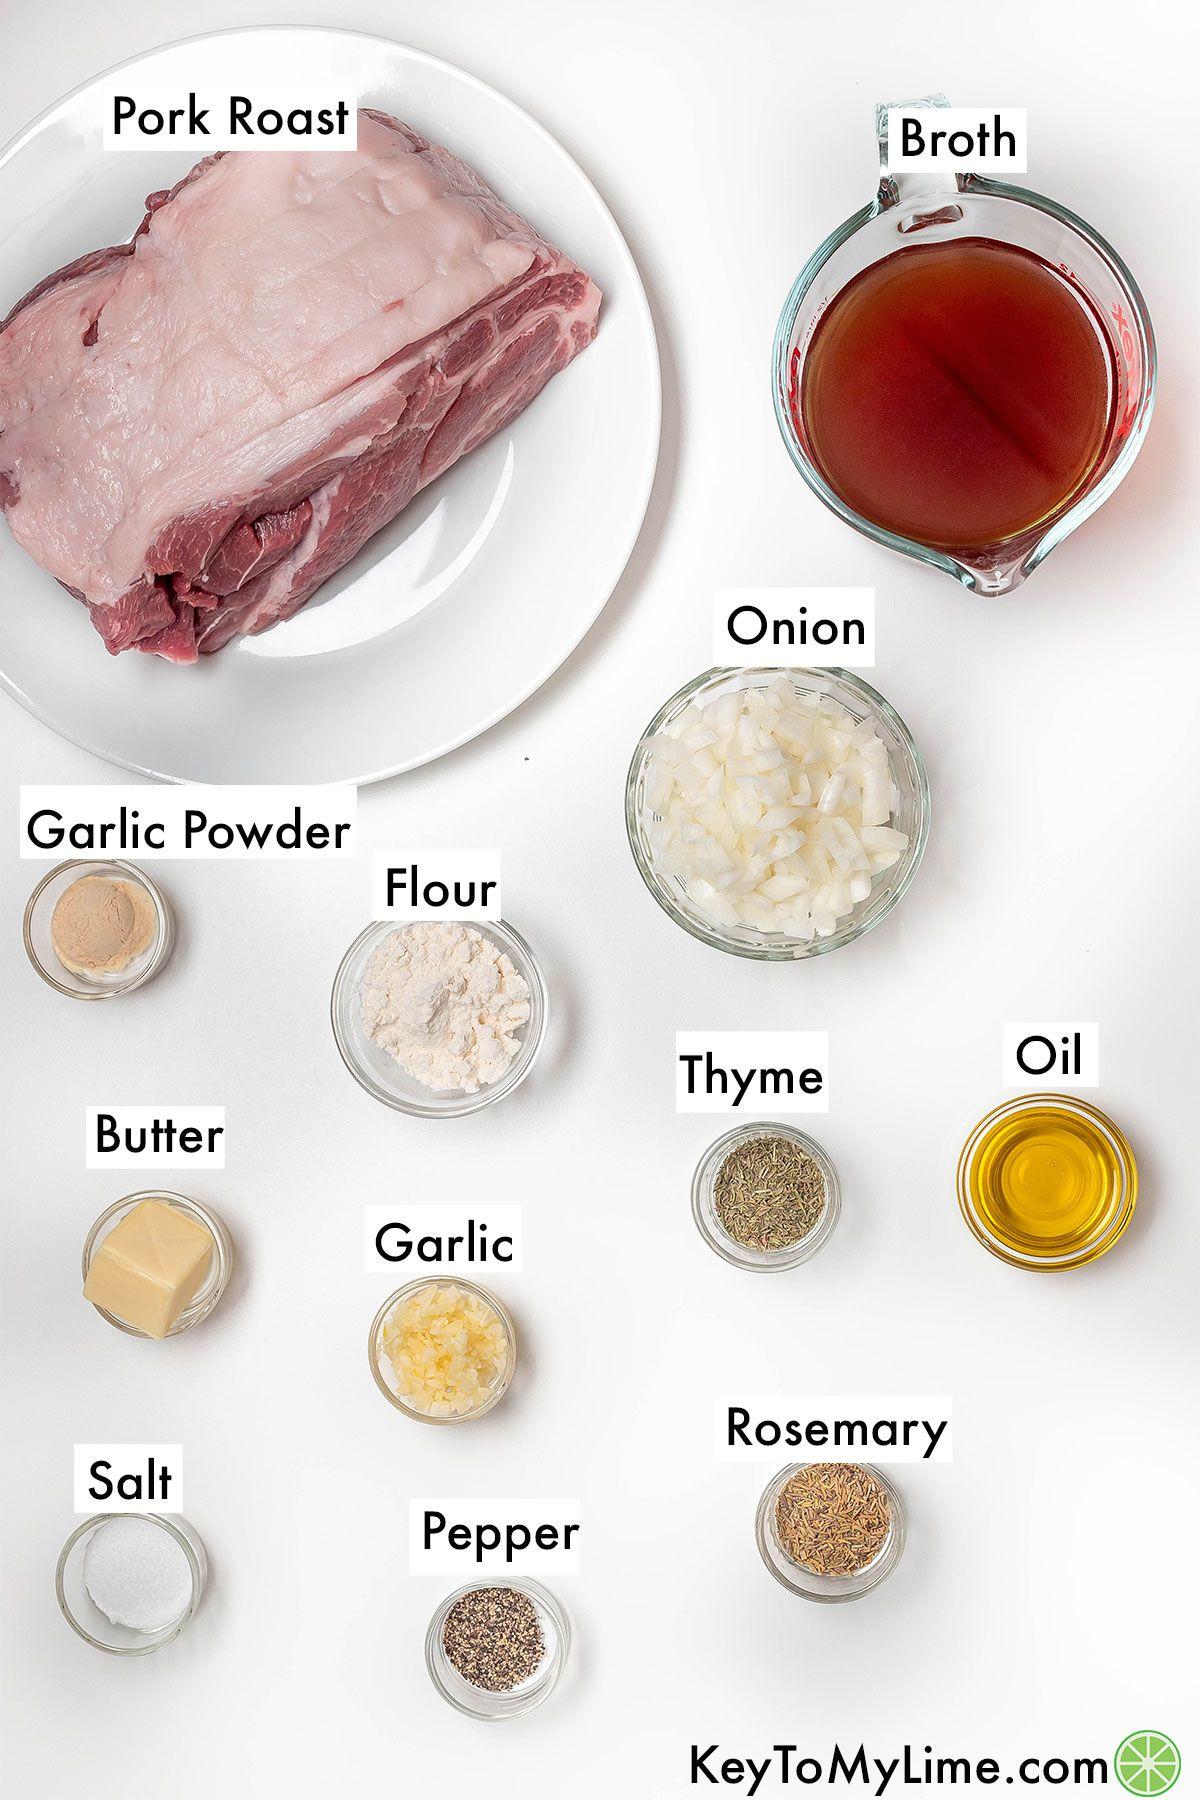 The labeled ingredients for pork ribeye roast.